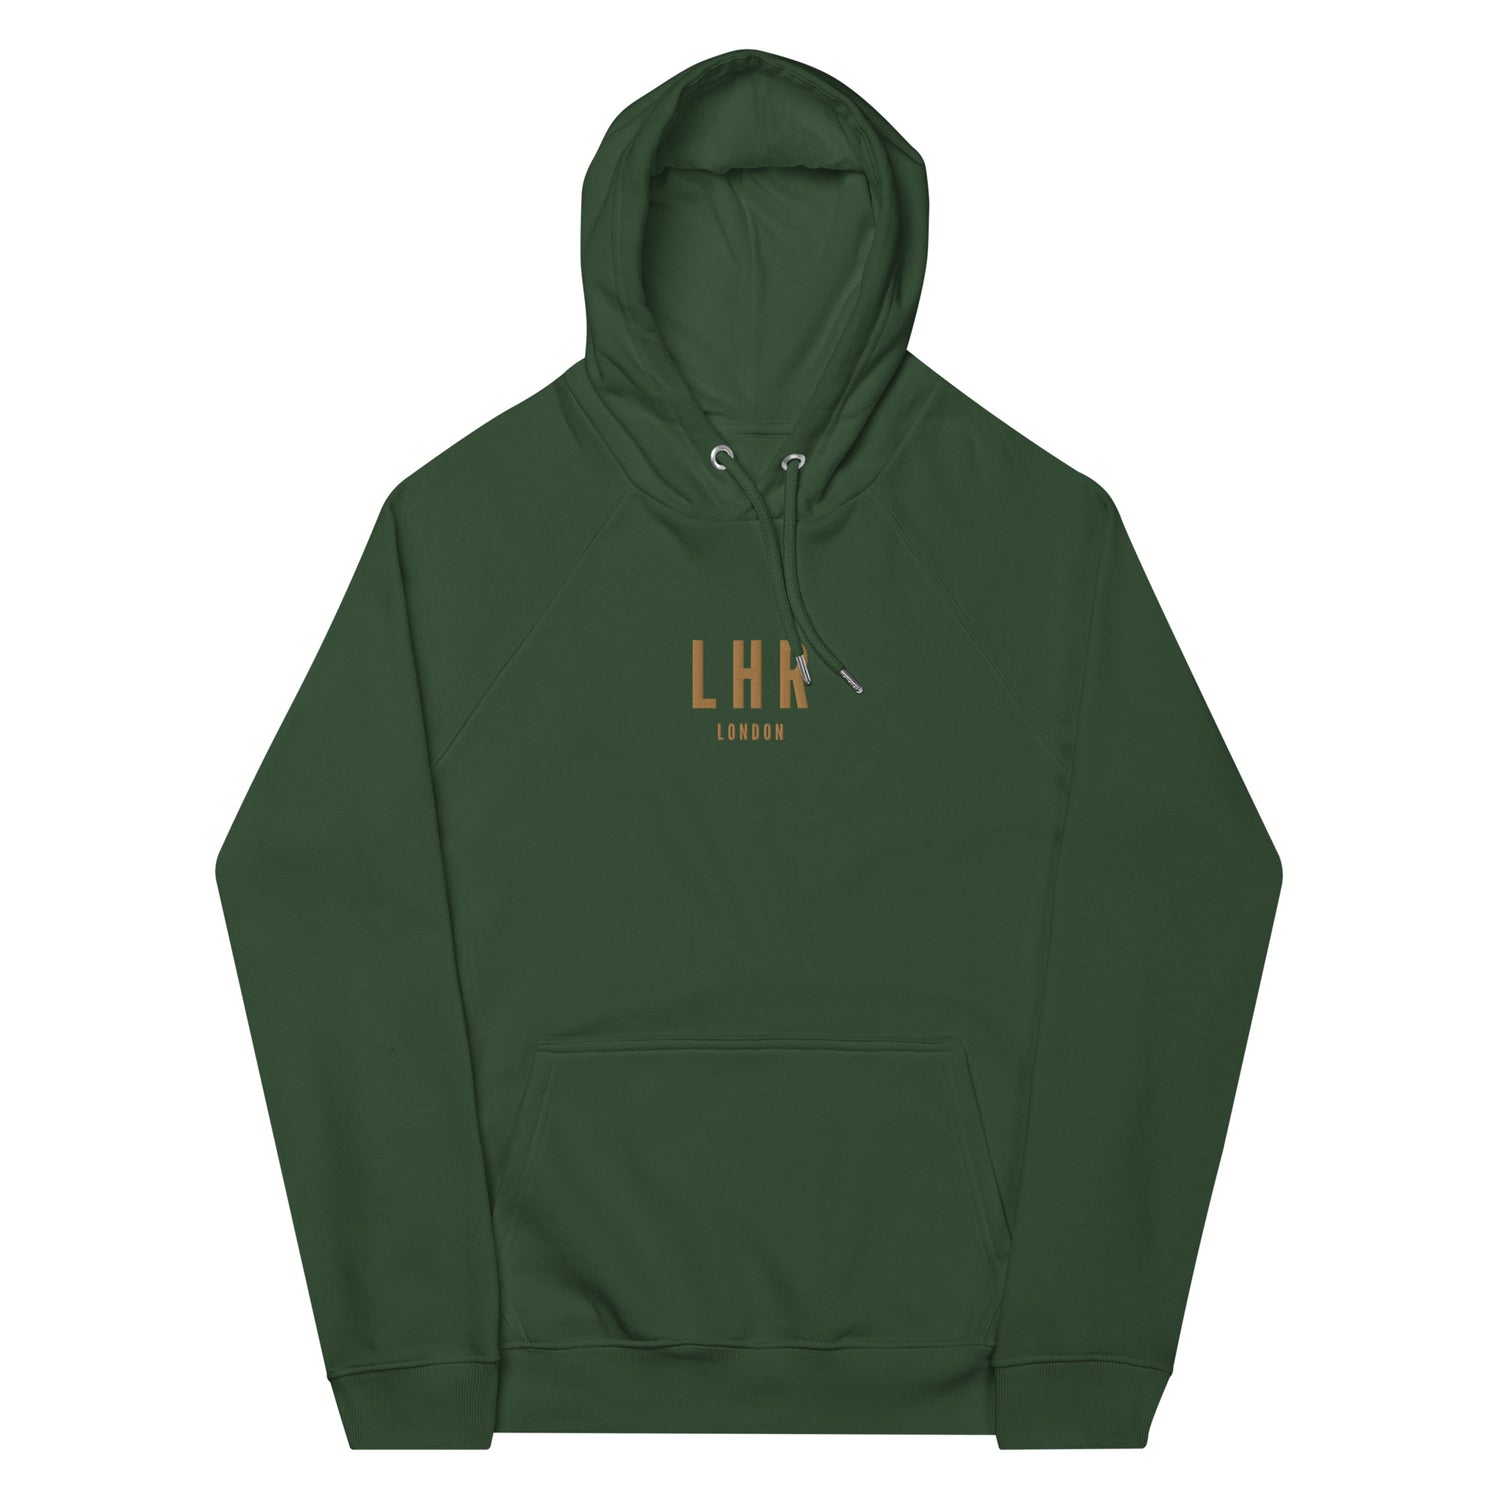 London England Hoodies and Sweatshirts • LHR Airport Code